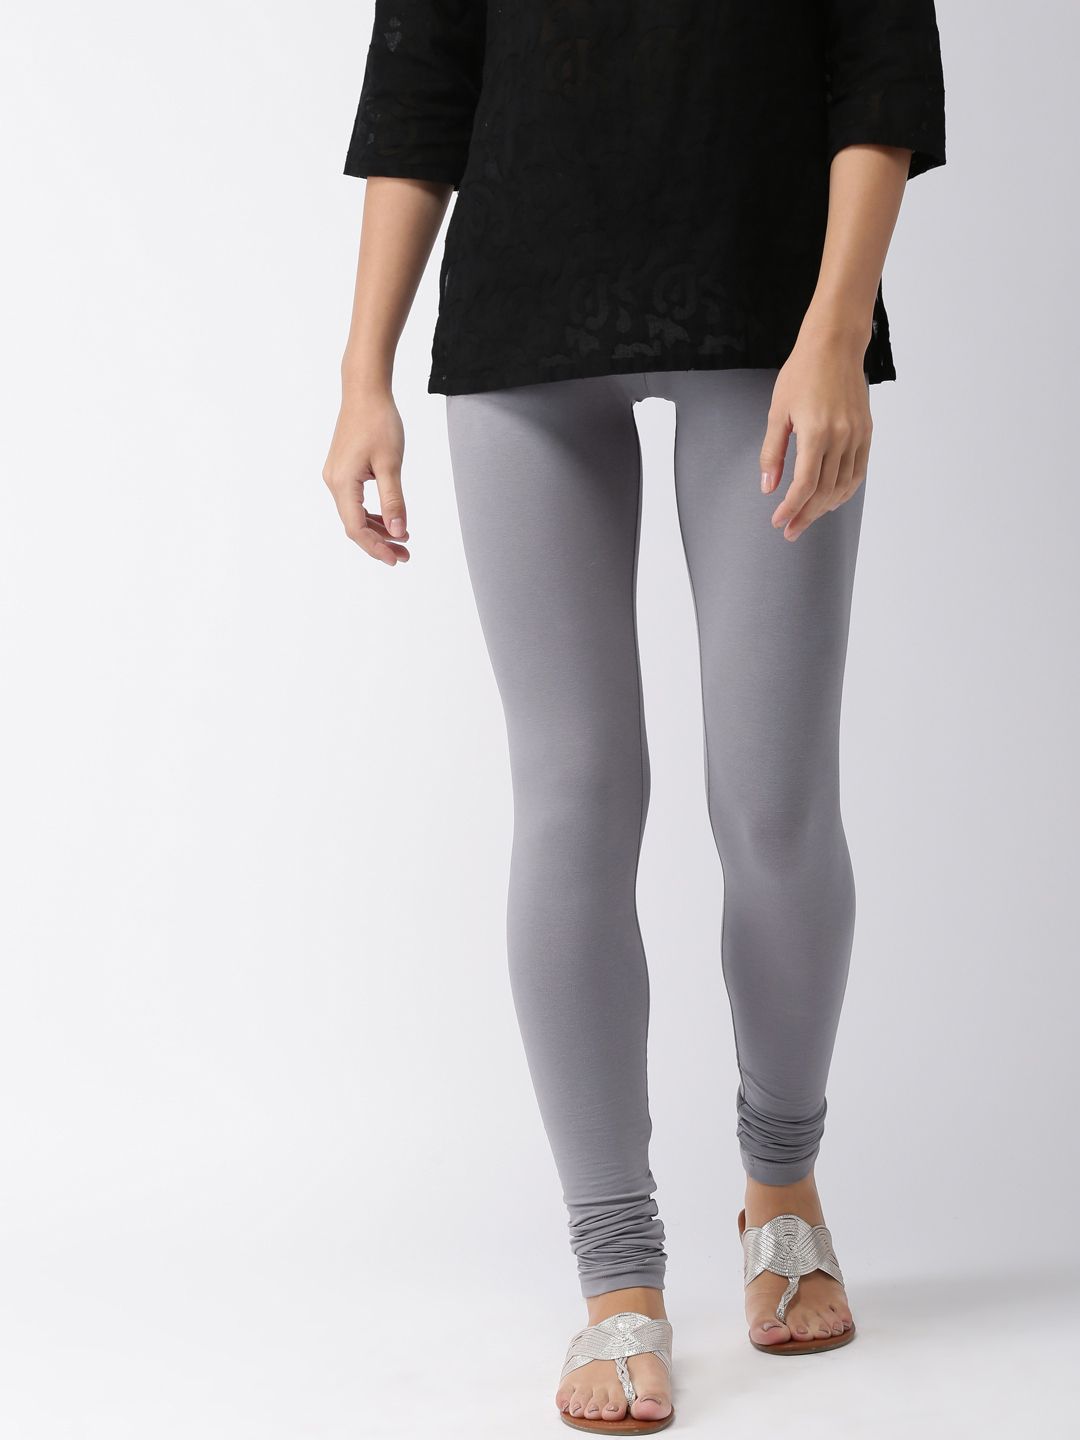 Go Colors Women Grey Solid Churidar Length Leggings Price in India